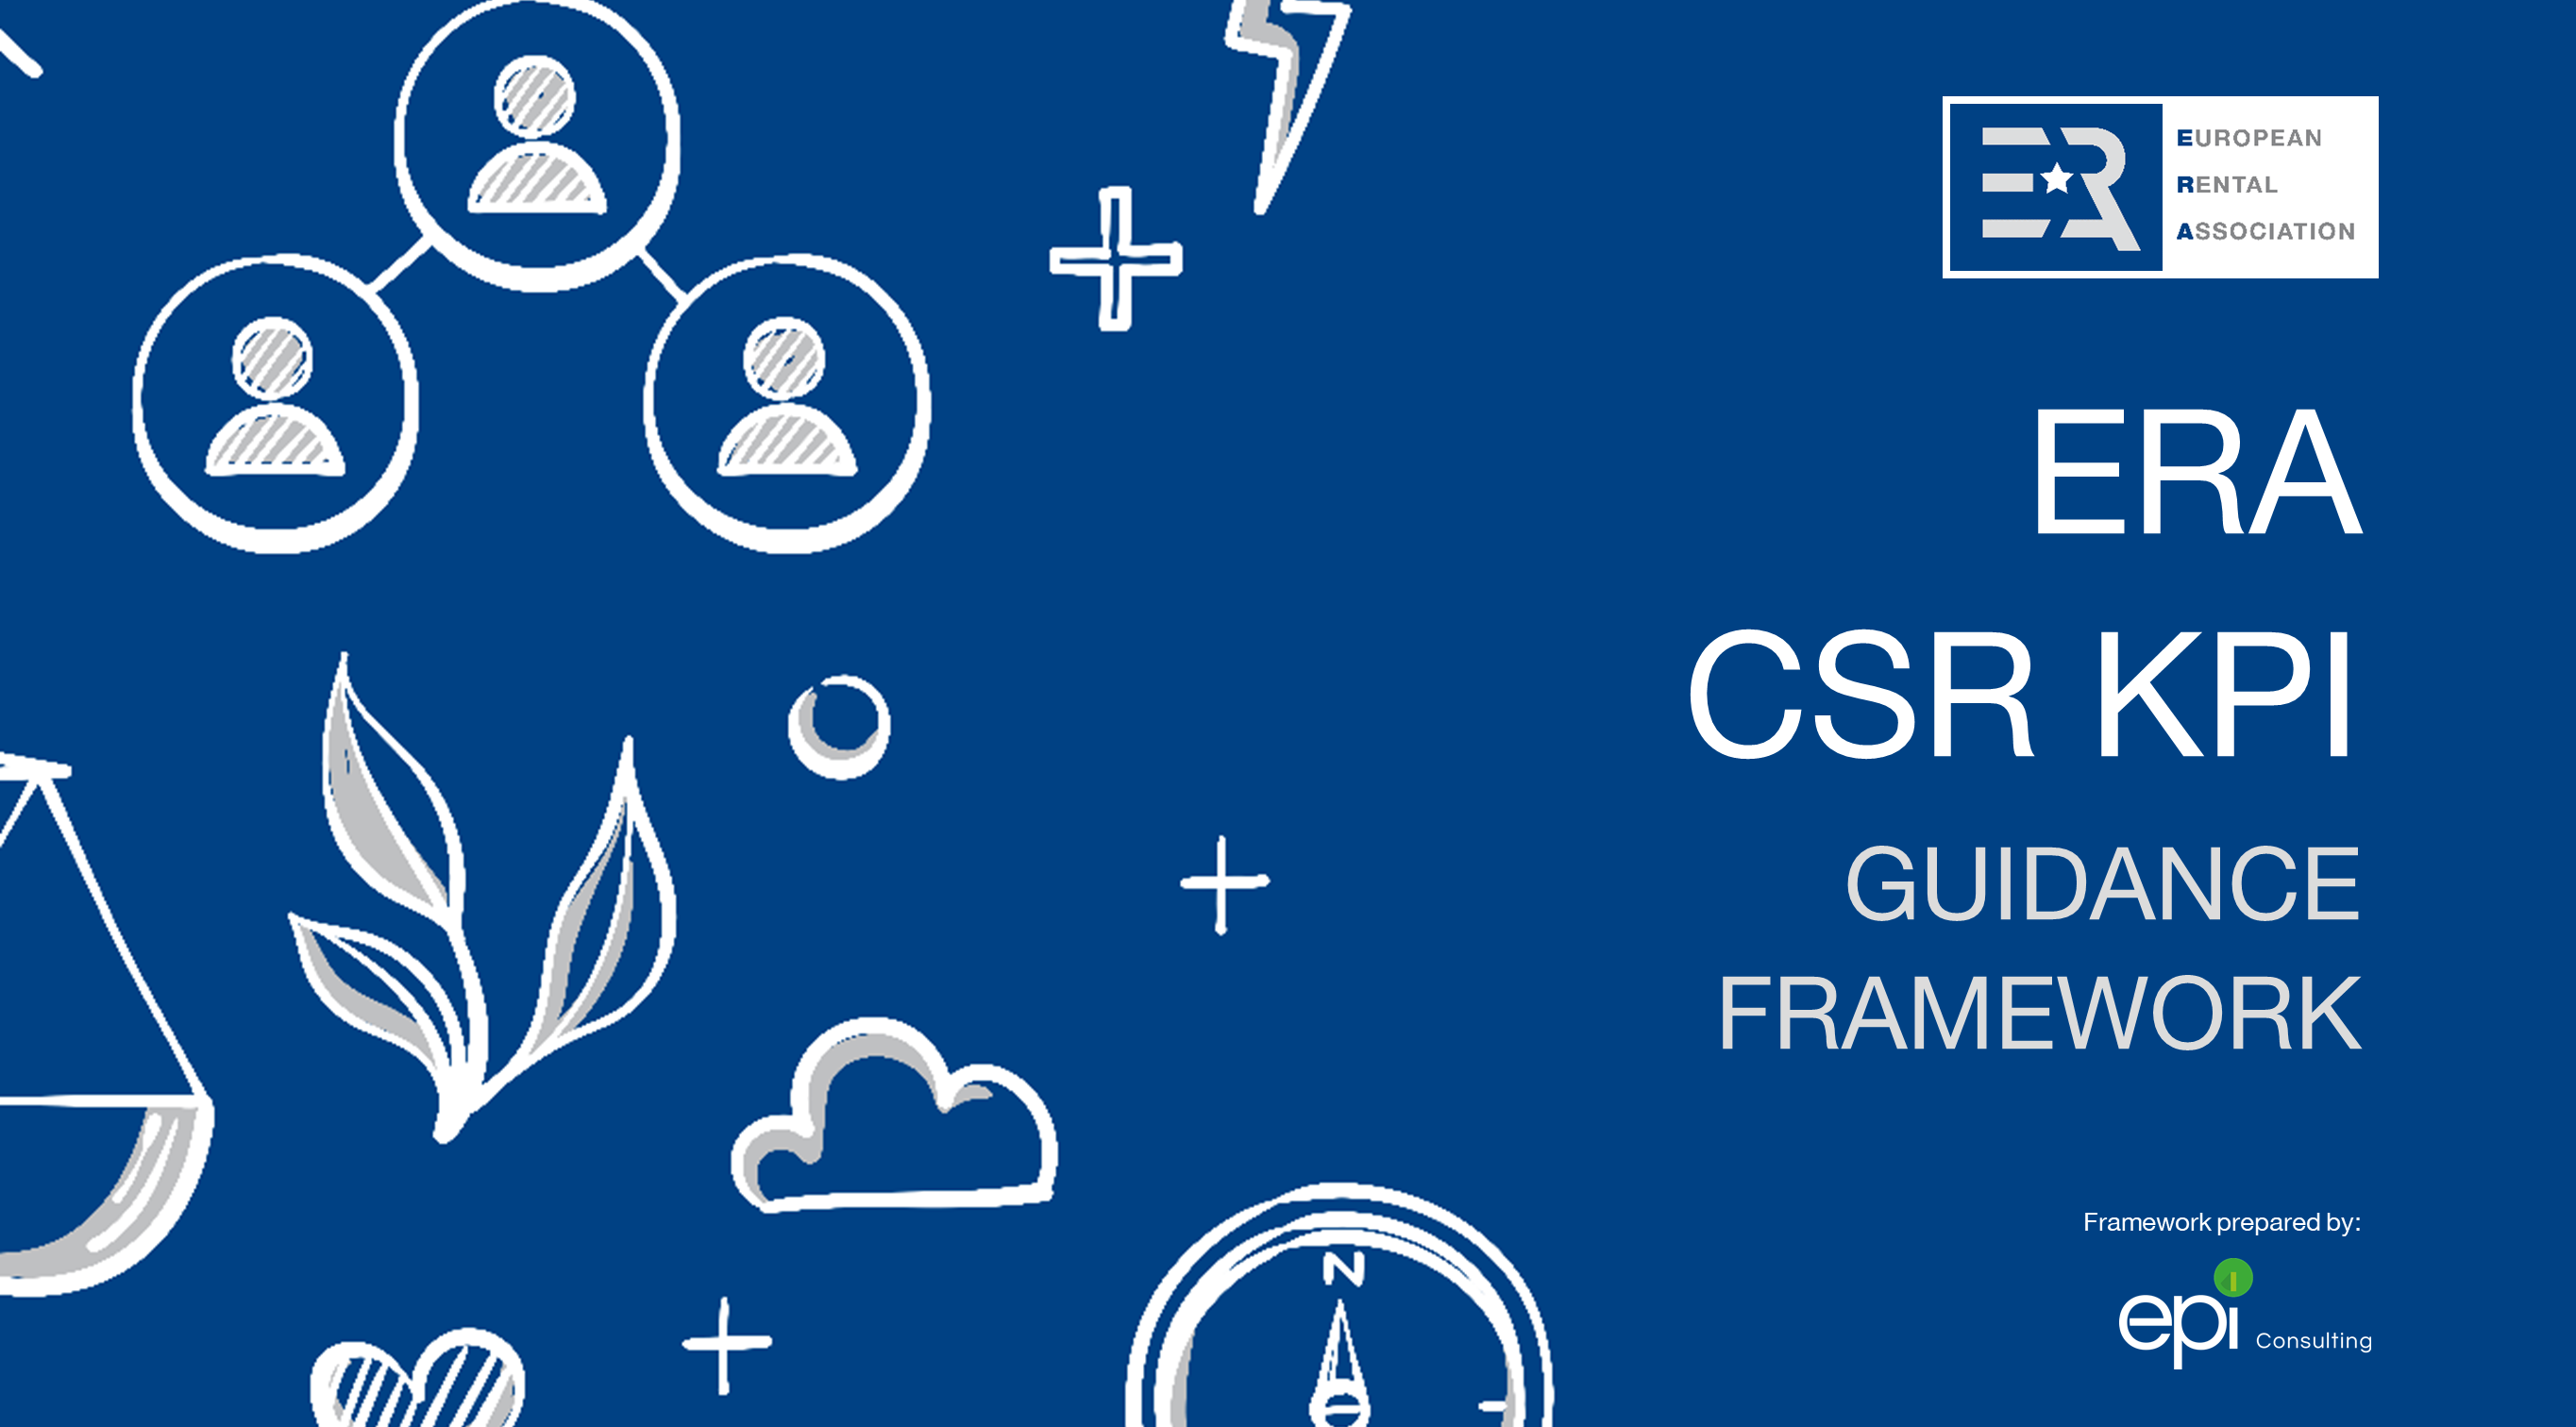 ERA CSR KPI Guidance Framework